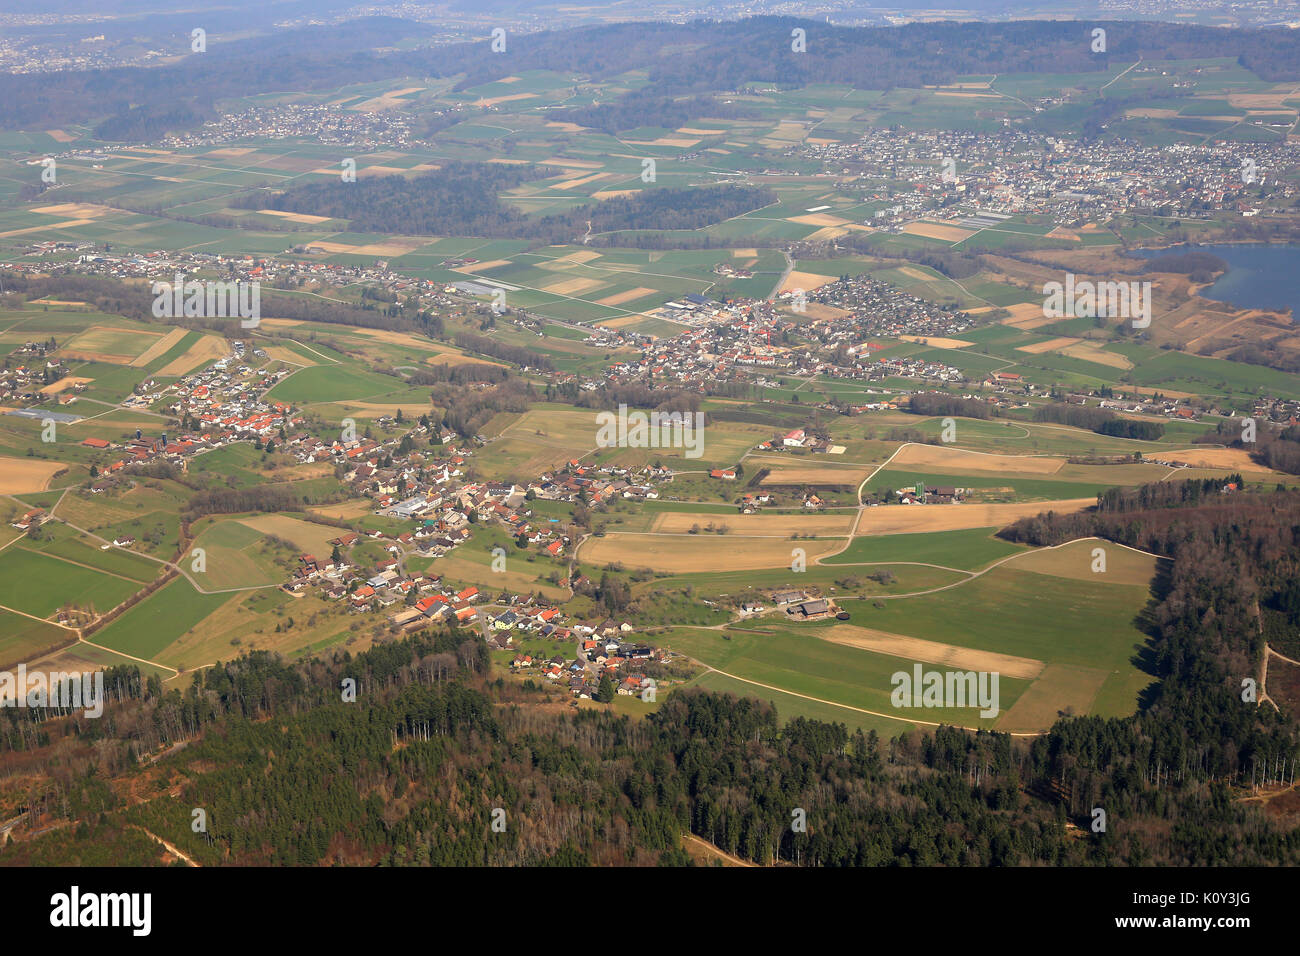 Leutwil Boniswil Hallwil Seengen Canton Aargau Switzerland aerial view photography photo Stock Photo